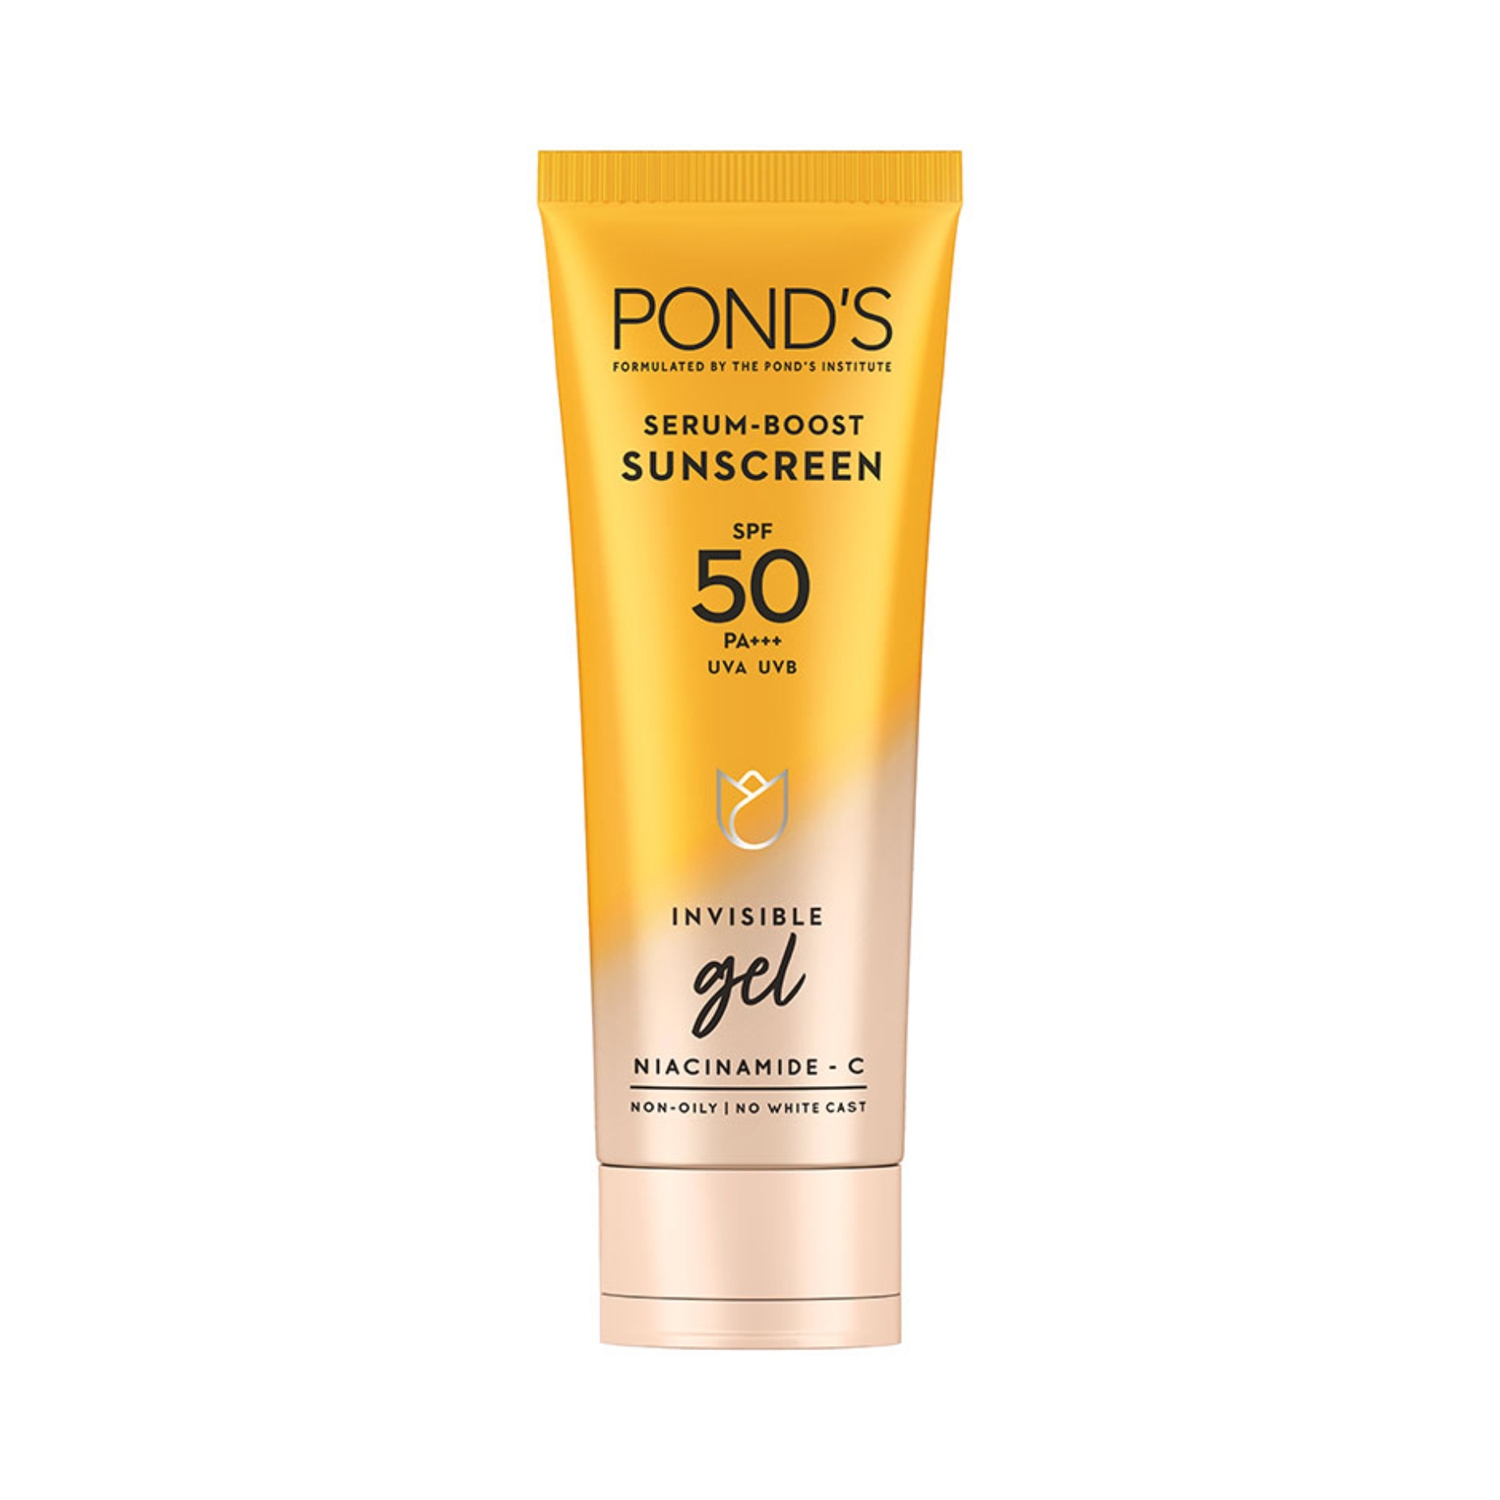 Pond's | Pond's Serum Boost Sunscreen Gel SPF 50 (50g)